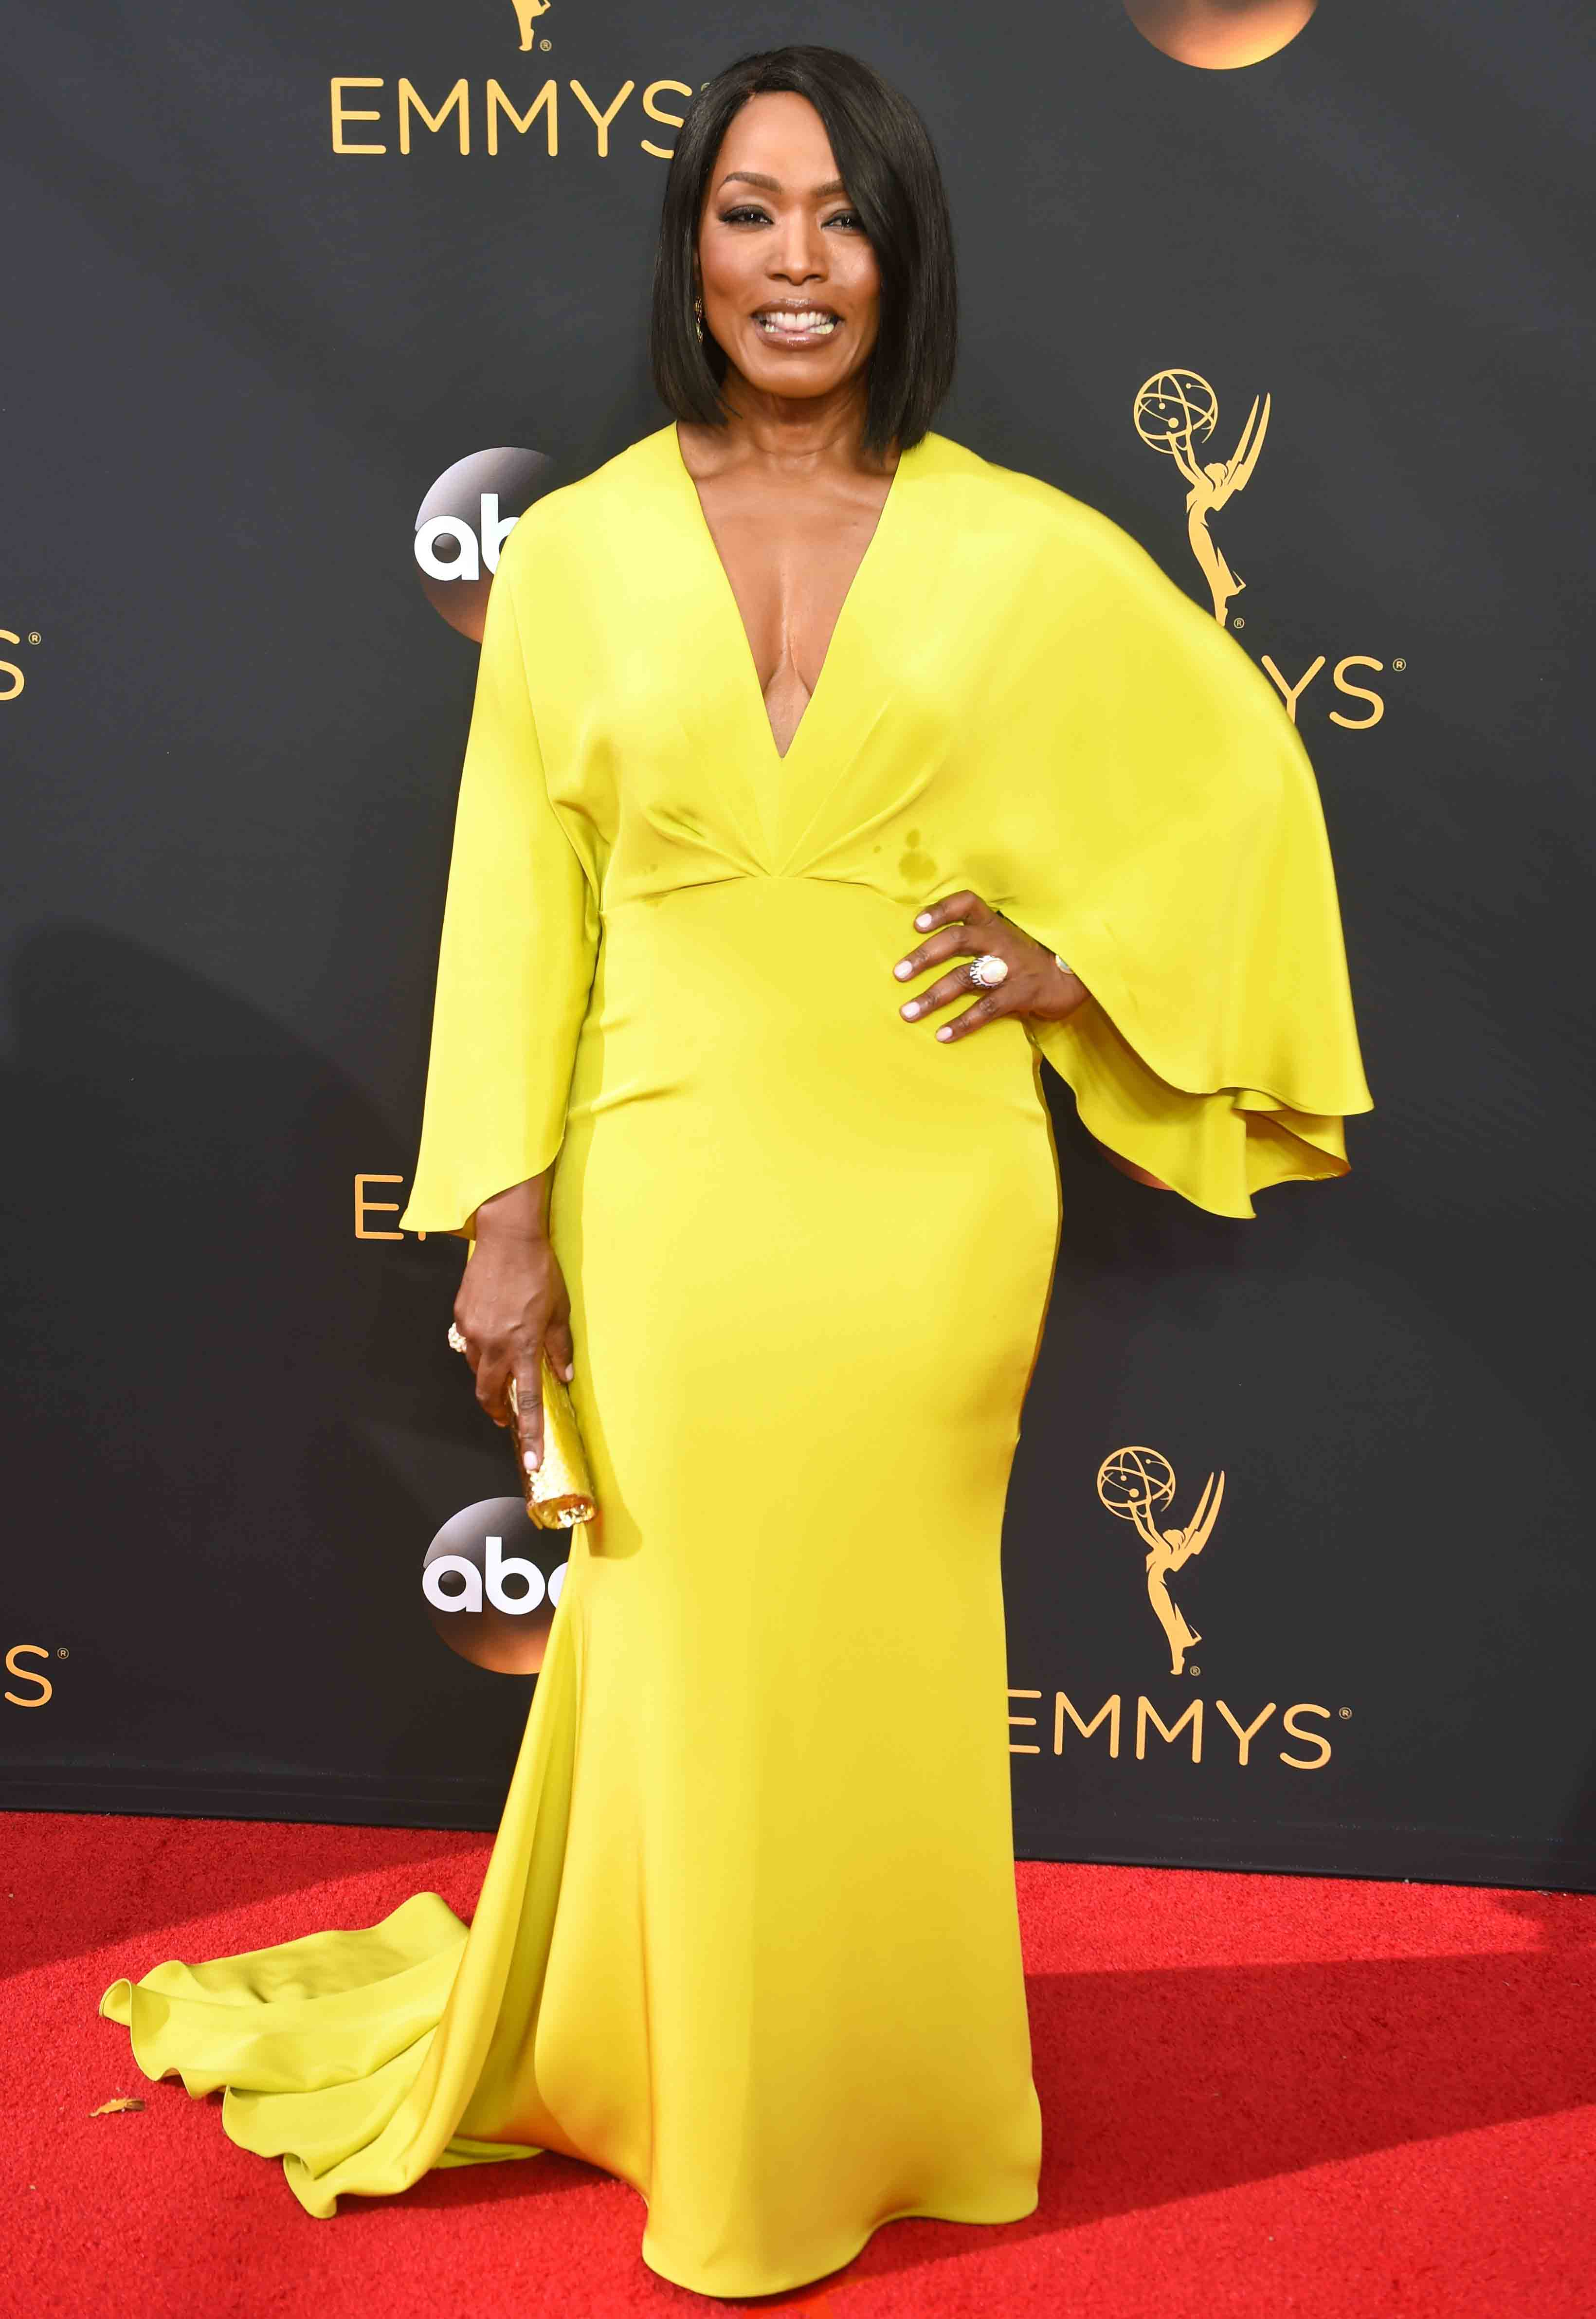 Emmys 2016 Red Carpet Fashion: Photos